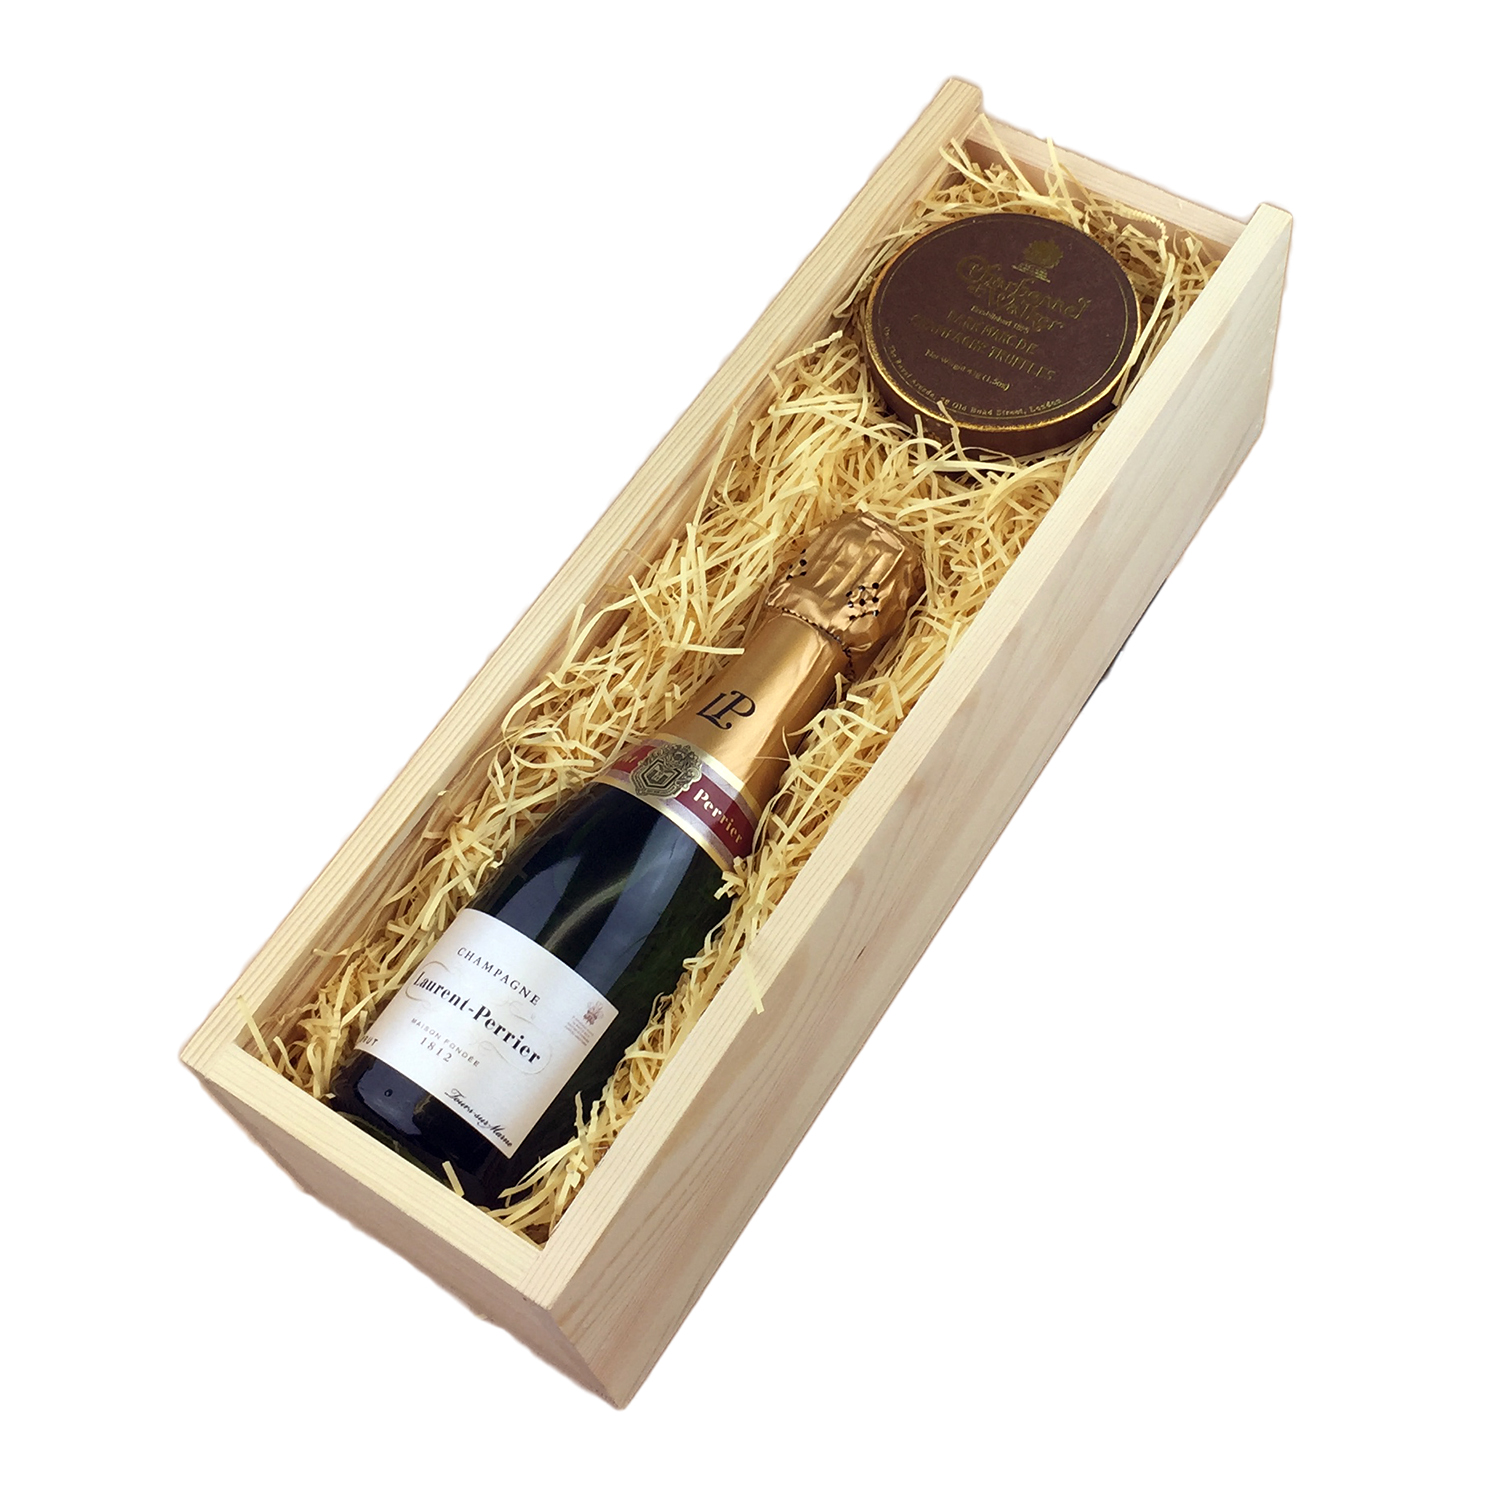 Buy & Send Laurent Perrier La Cuvee, 20cl & 100g Chocolates Wooden Box Gift Online | Gifts ...